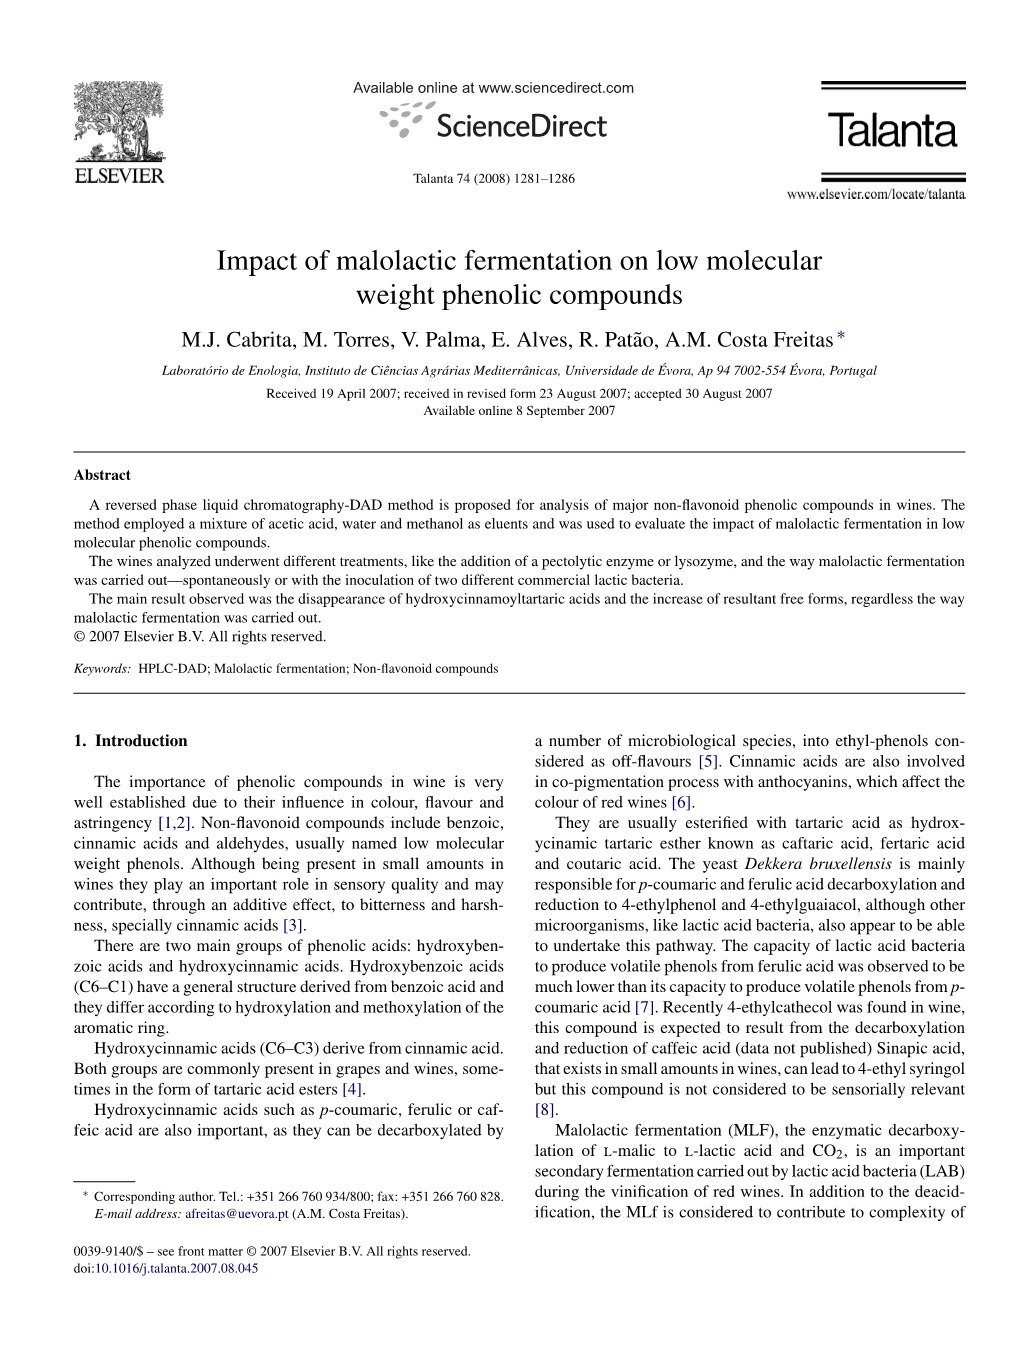 Impact of Malolactic Fermentation on Low Molecular Weight Phenolic Compounds M.J